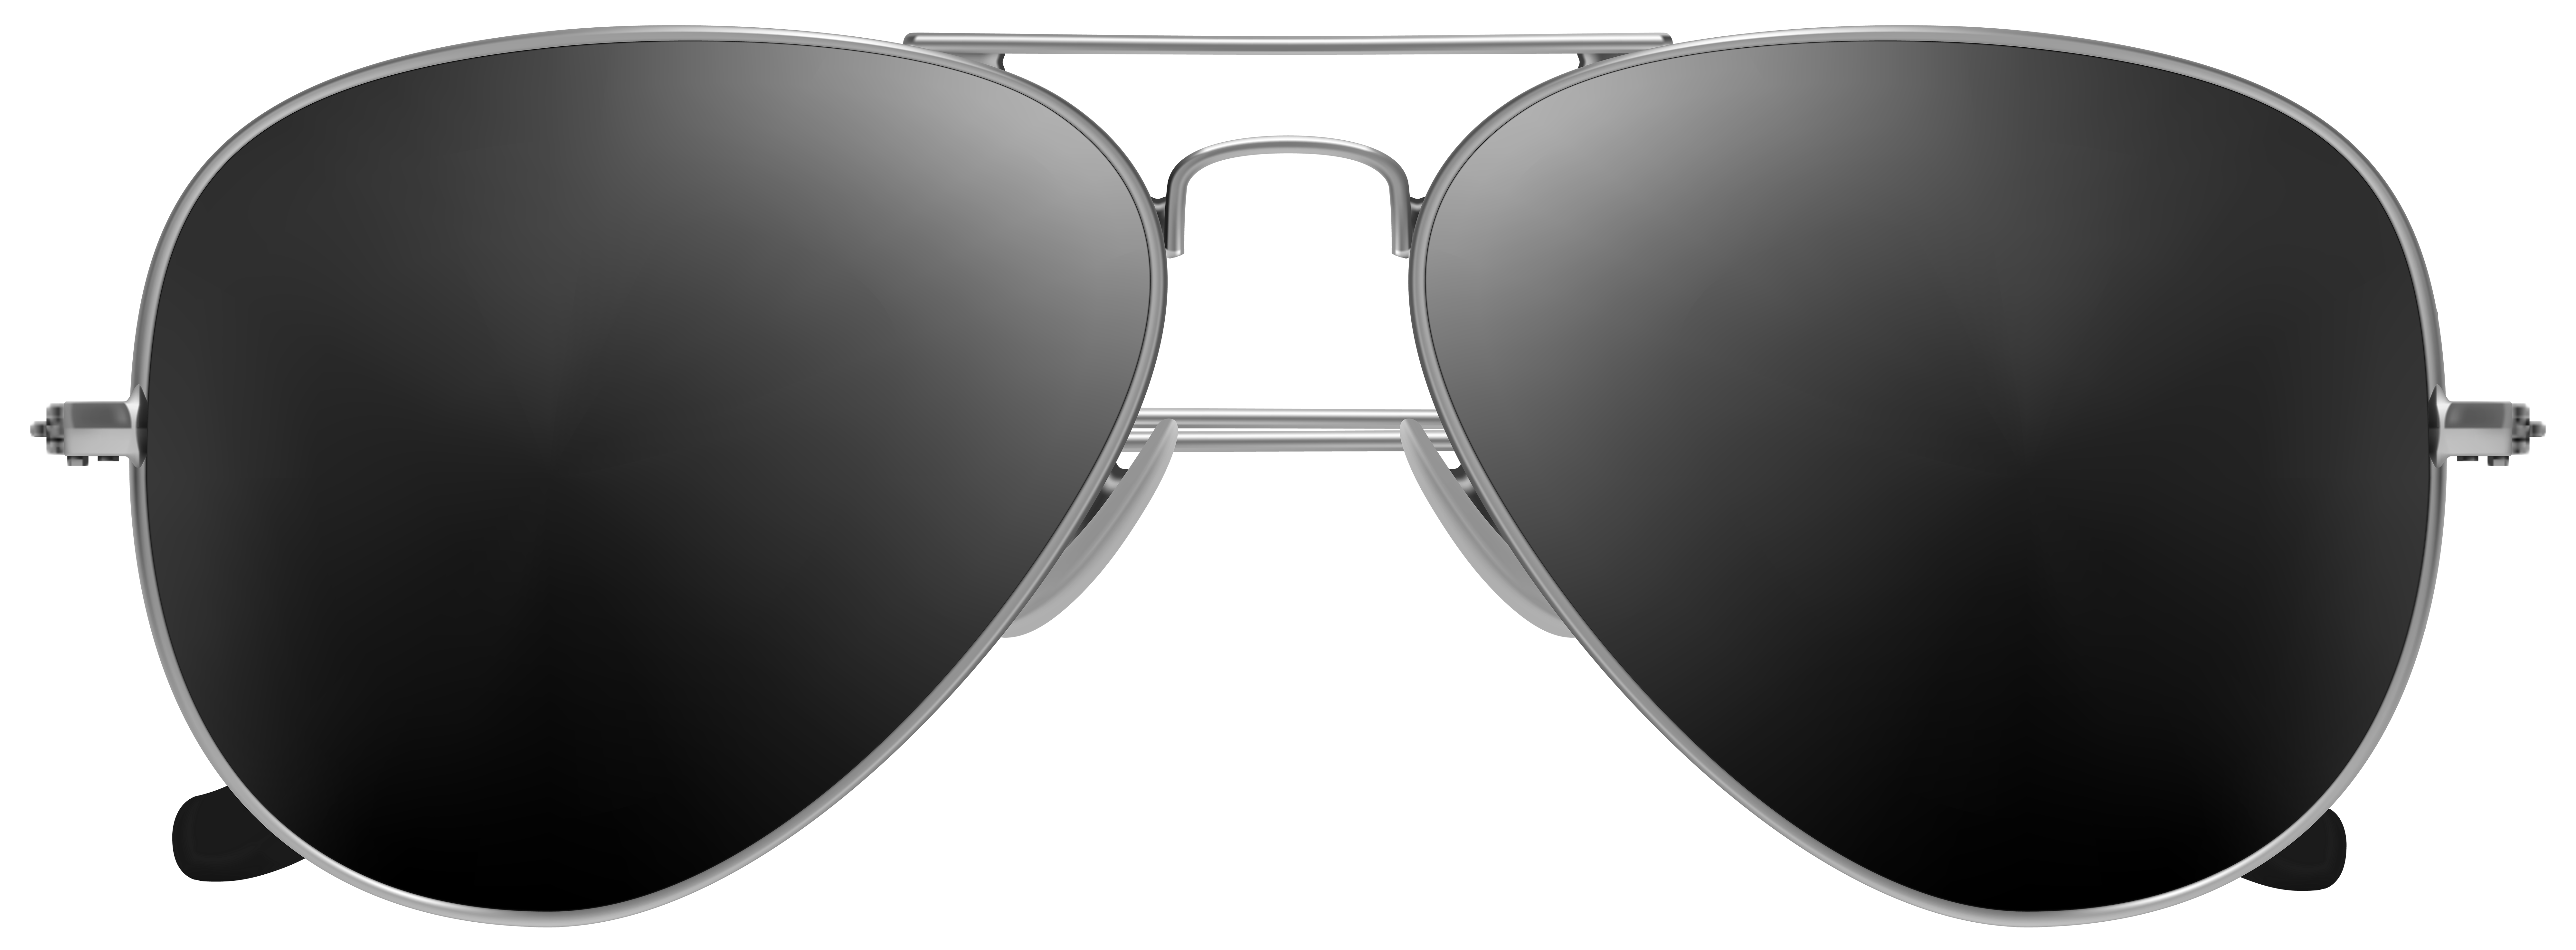 sunglasses png transparent